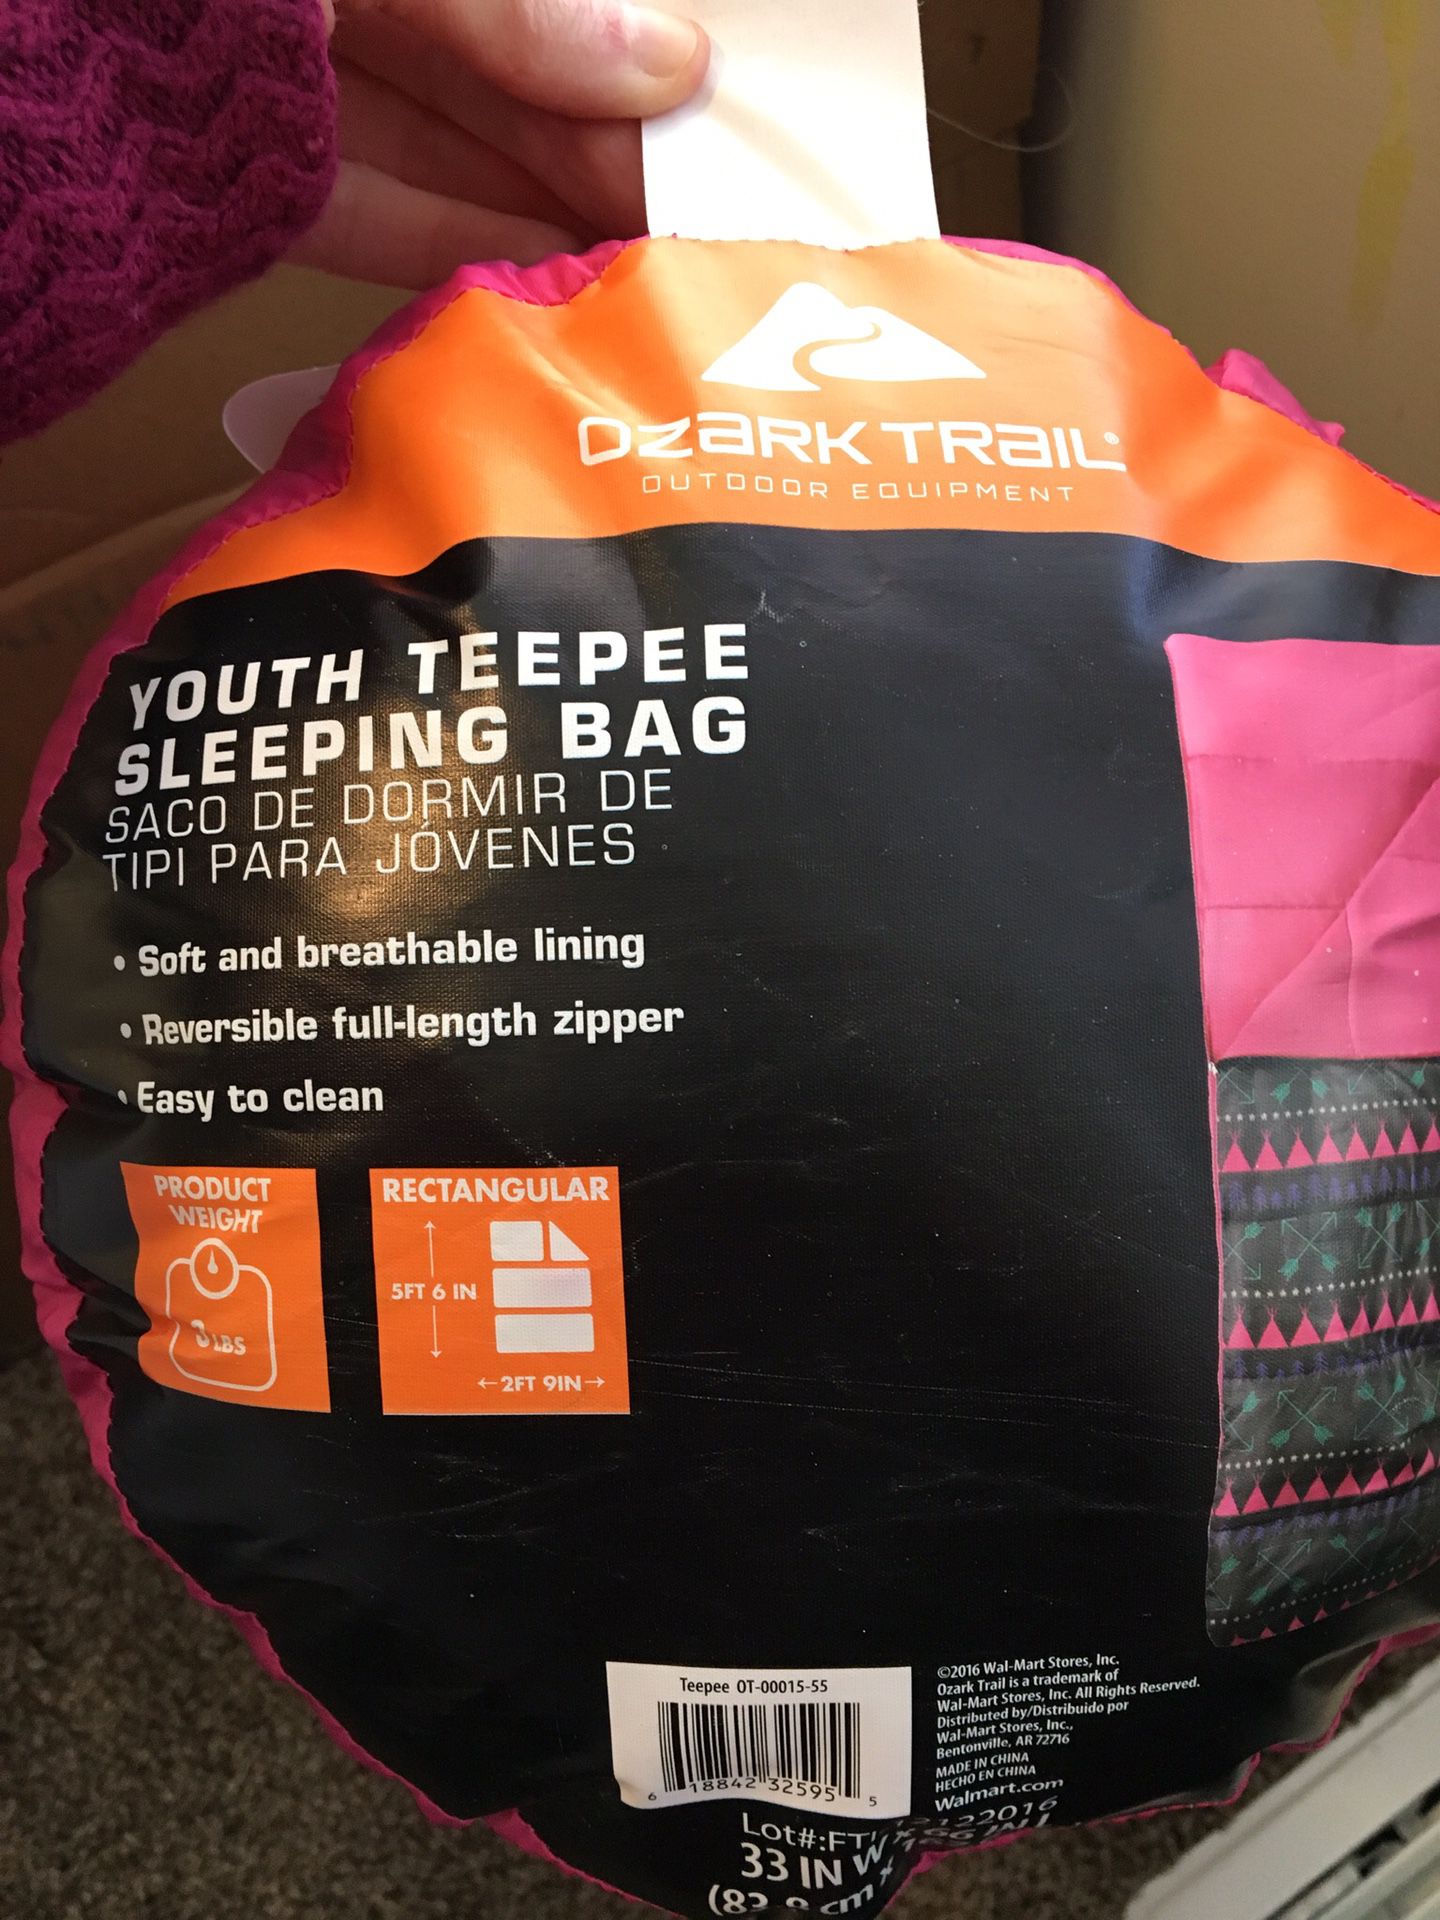 New! Ozark Trail youth sleeping bag